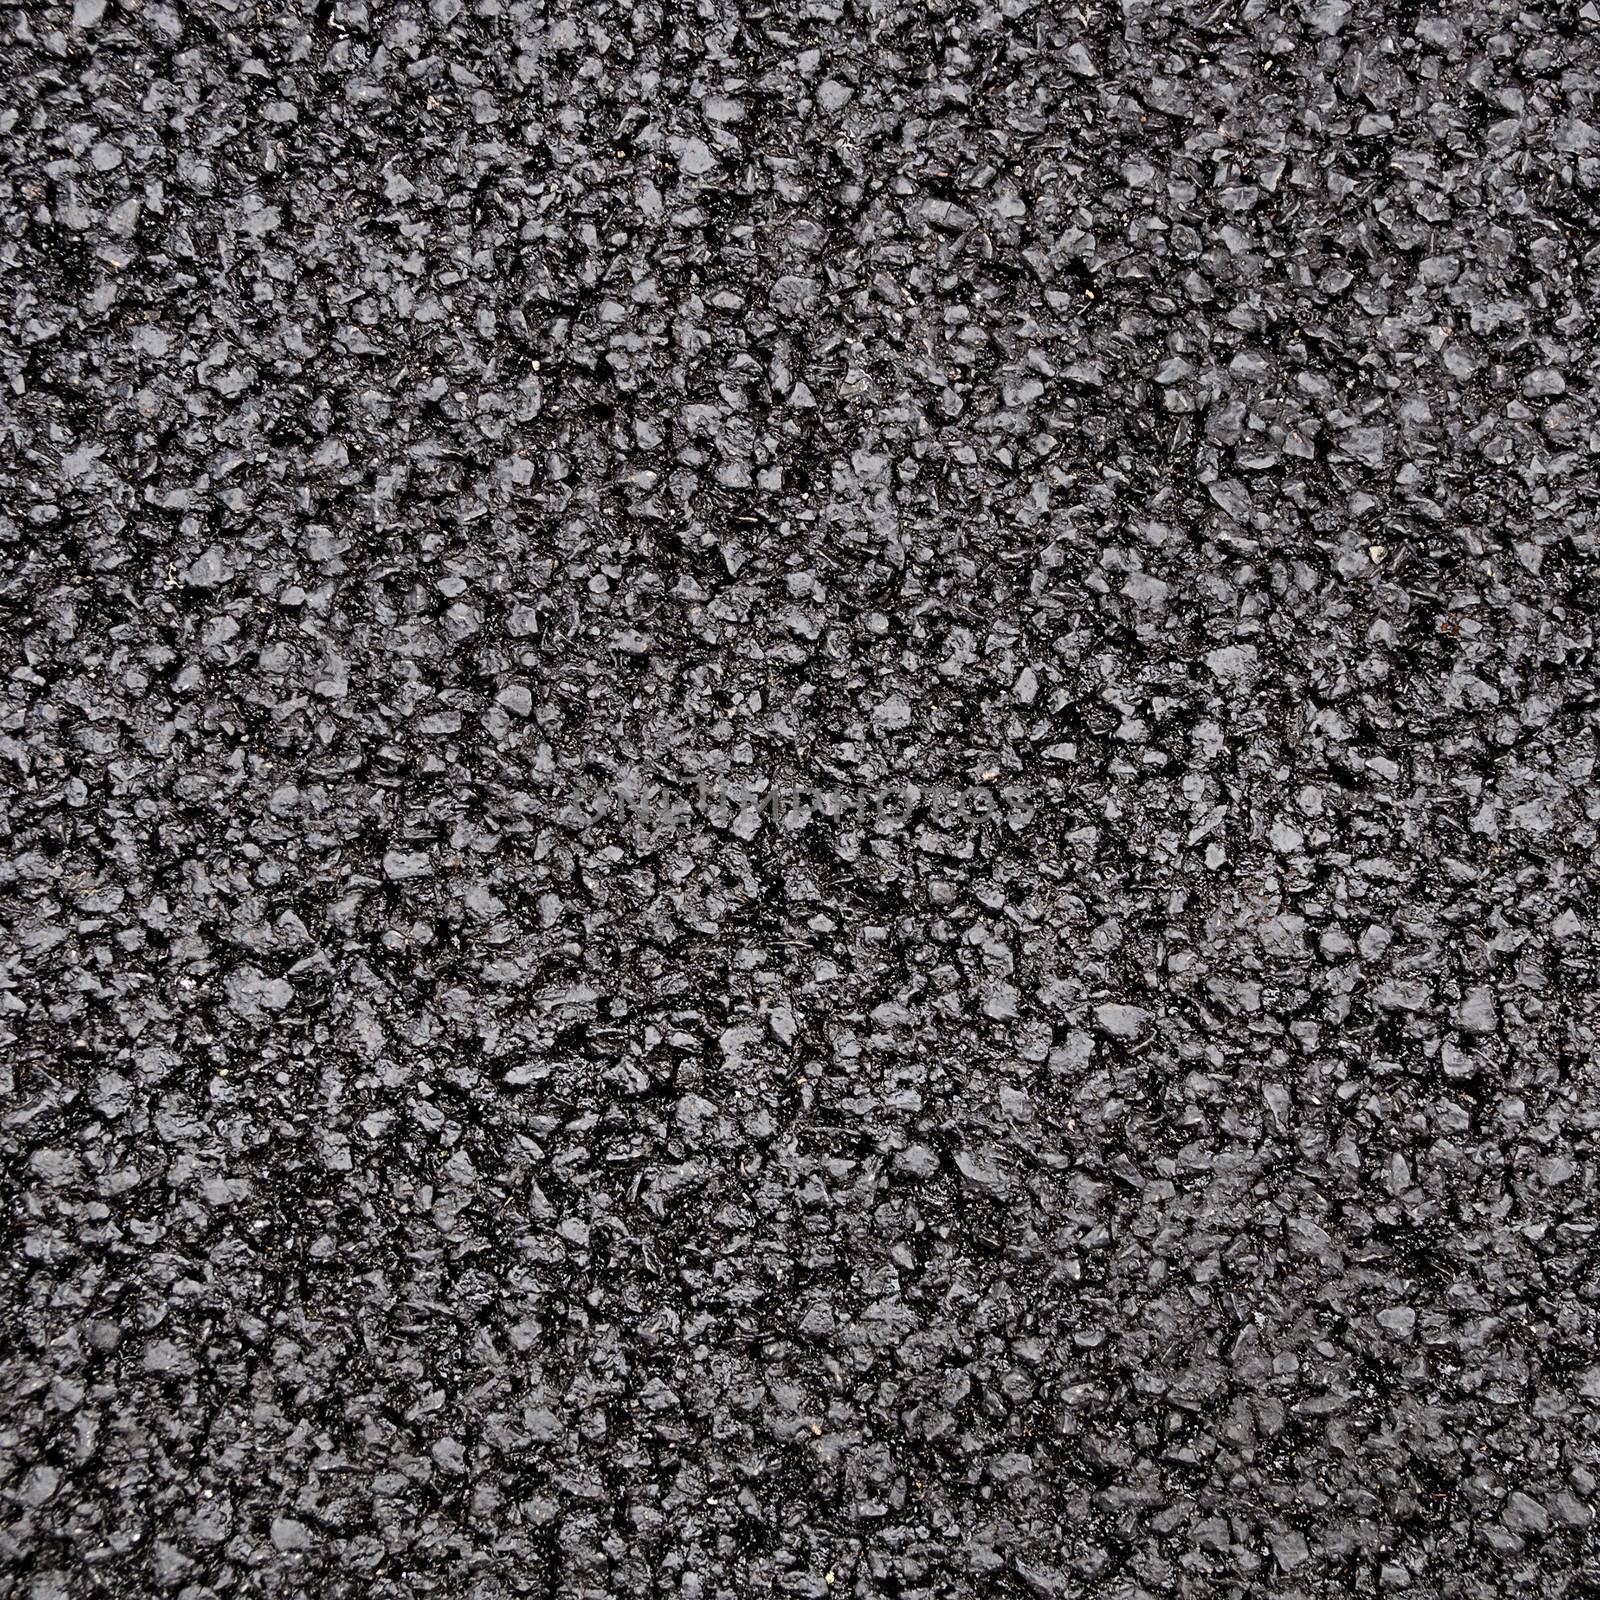 Macadam texture closeup, square photograph